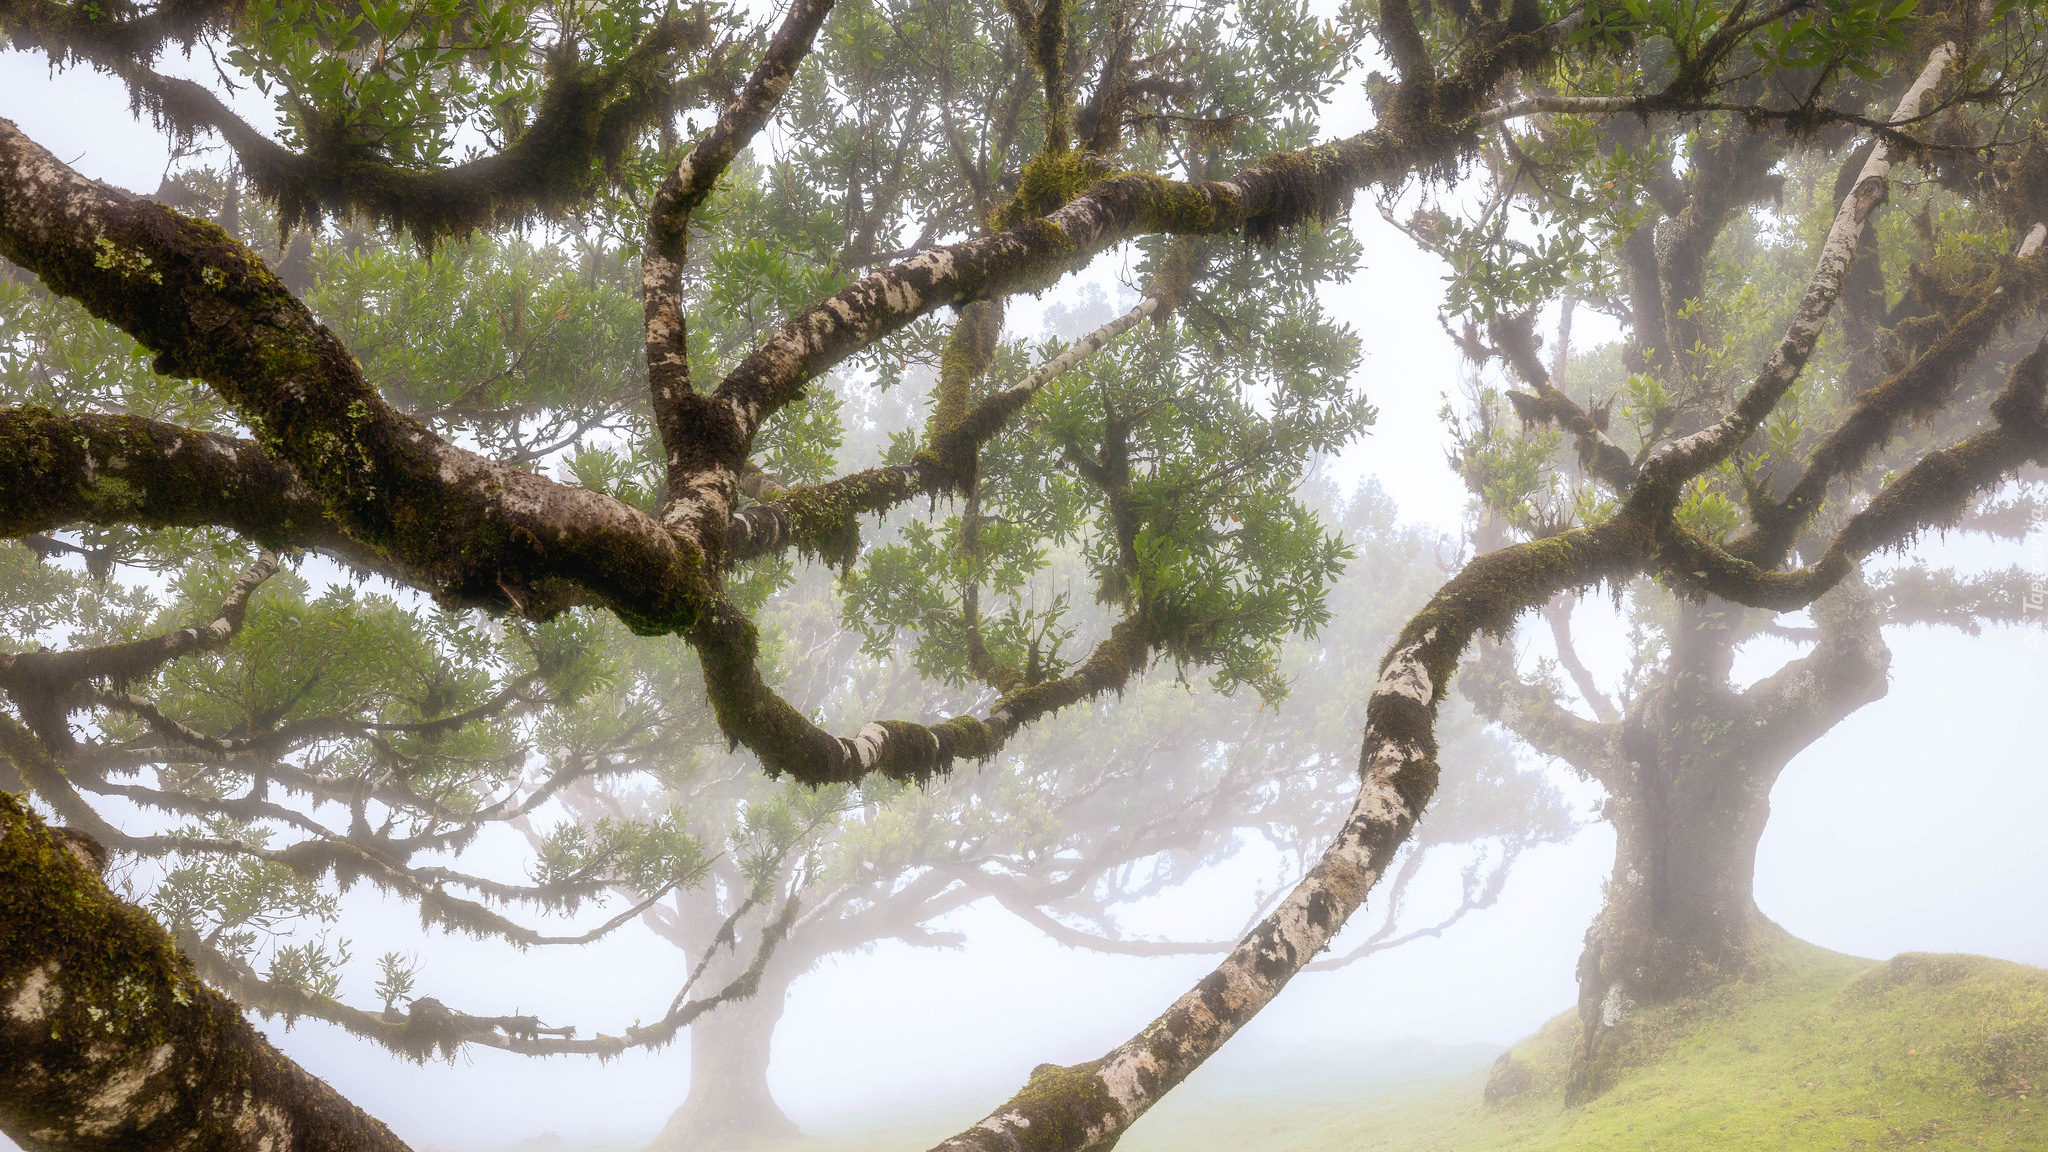 Drzewa, Mgła, Las